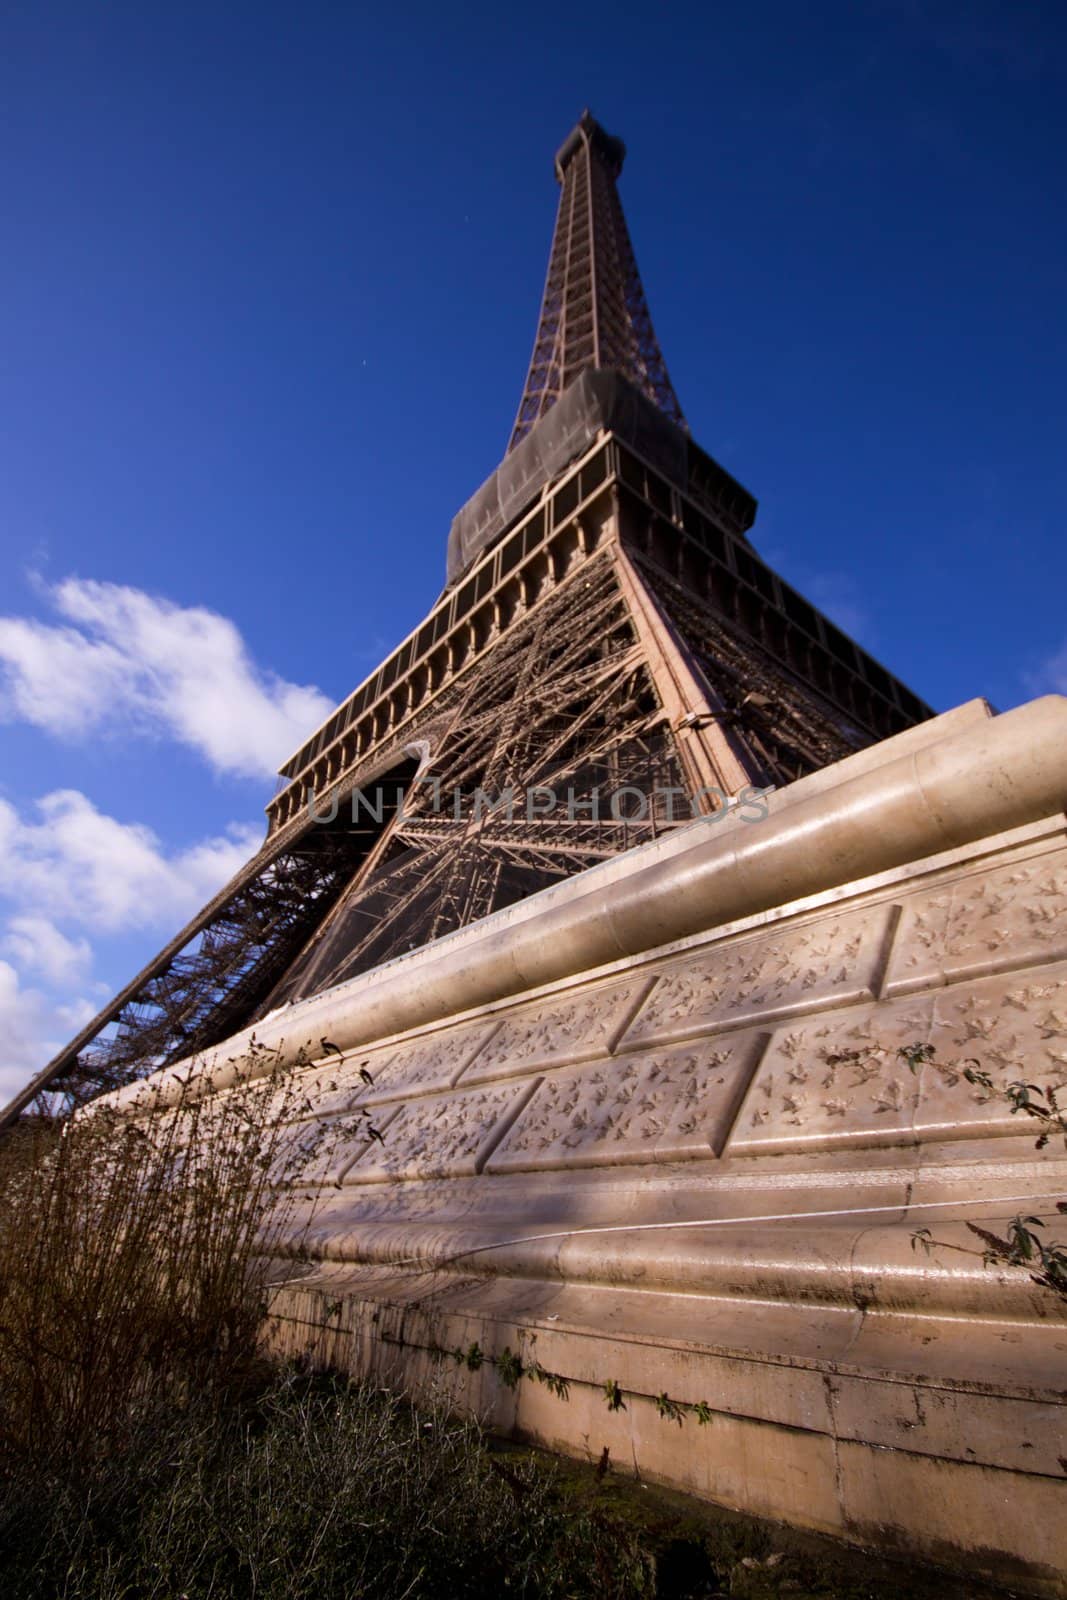 Eiffel Tower pillar by Harvepino